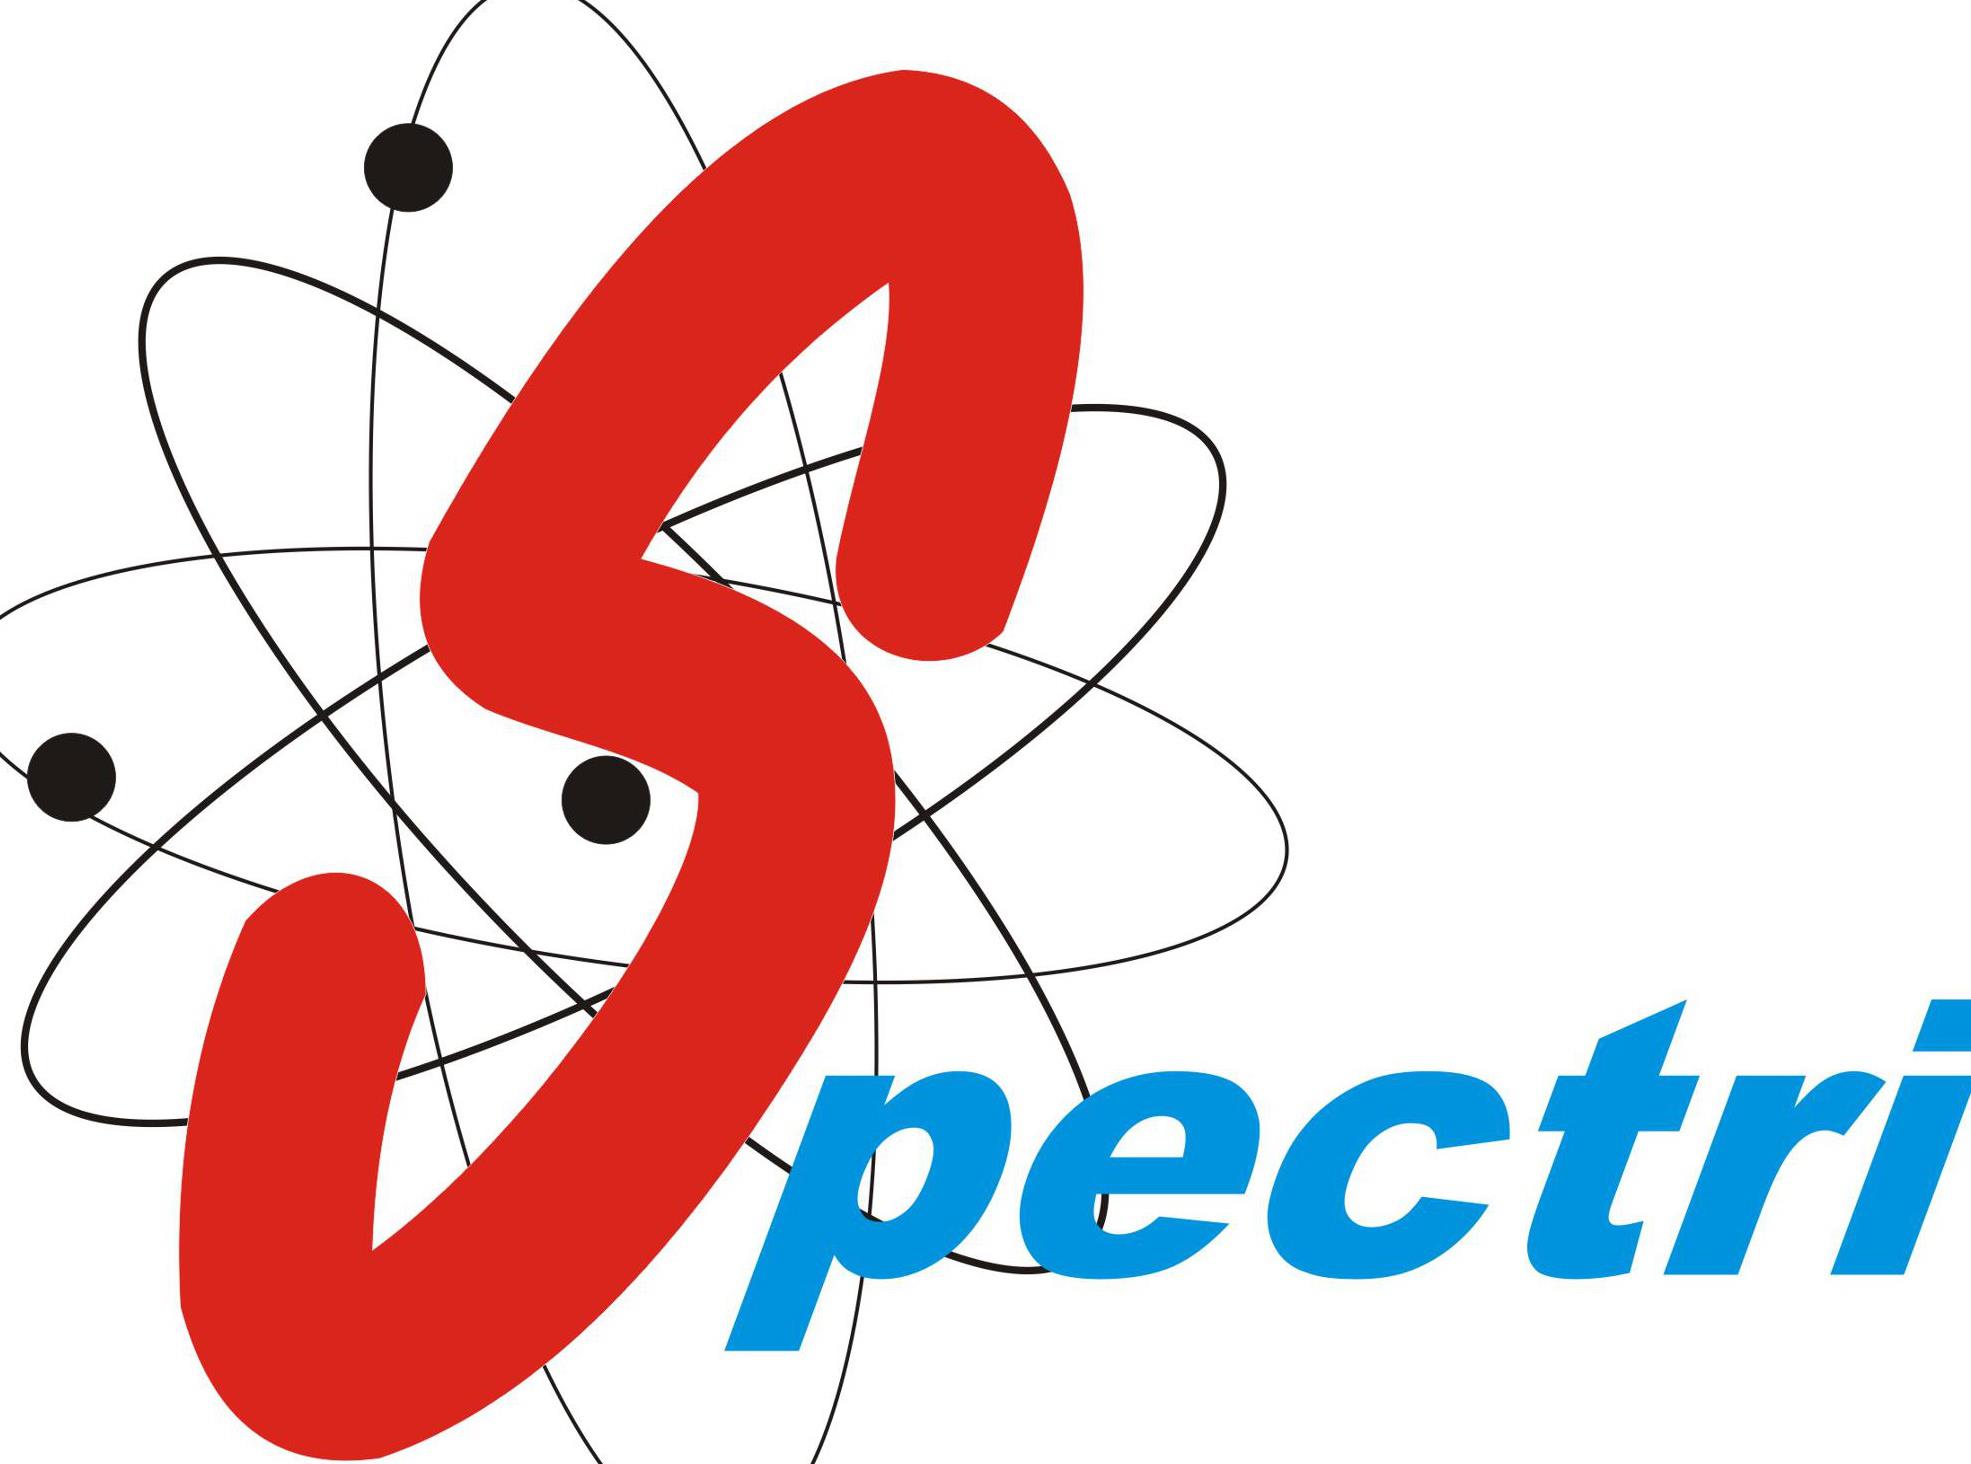 Imereti Scientists Union "Spectri"